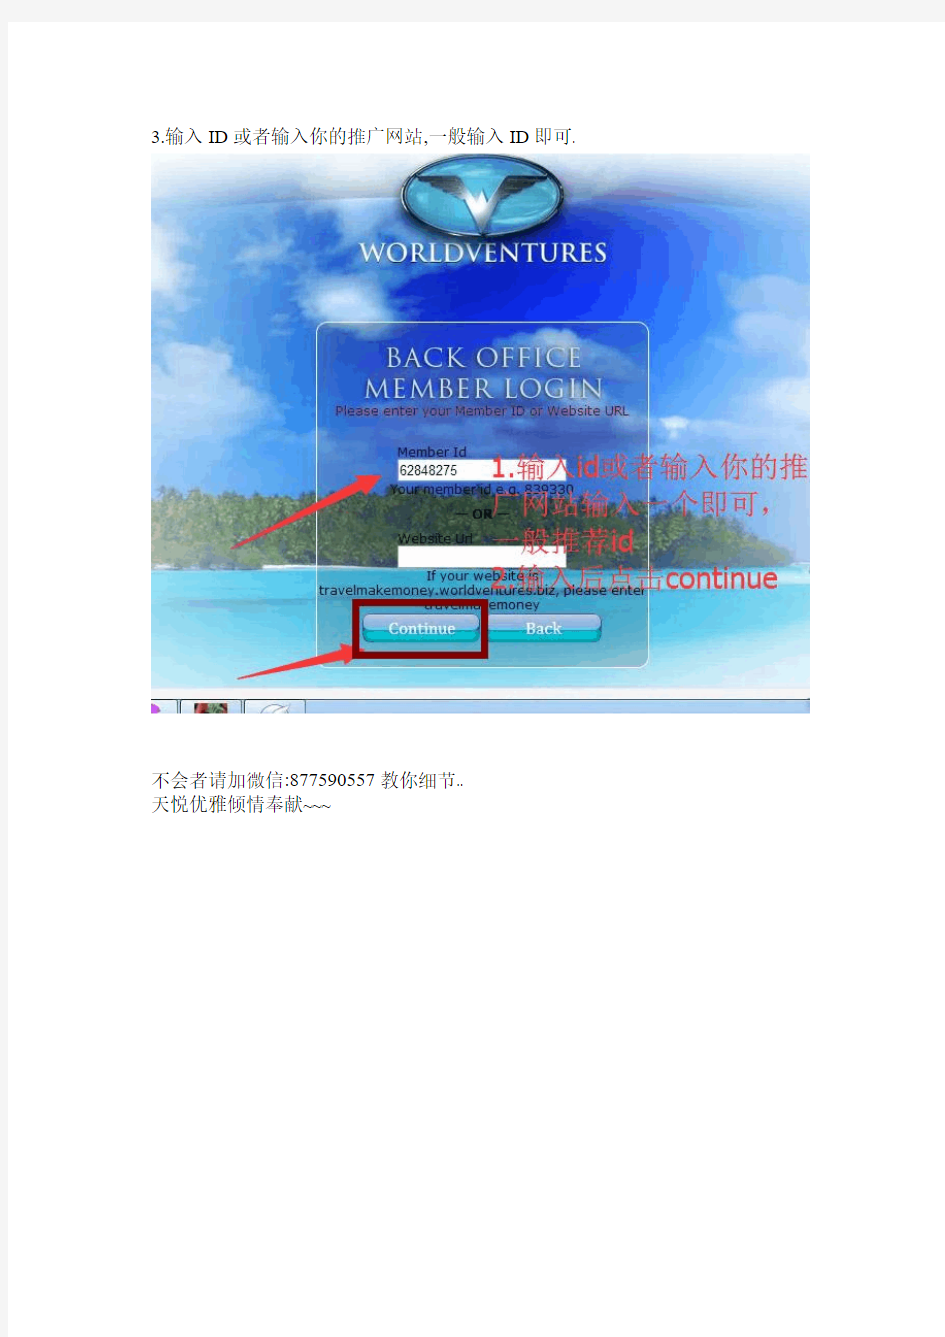 wv梦幻之旅网站后台都登陆不进去,到底什么原因